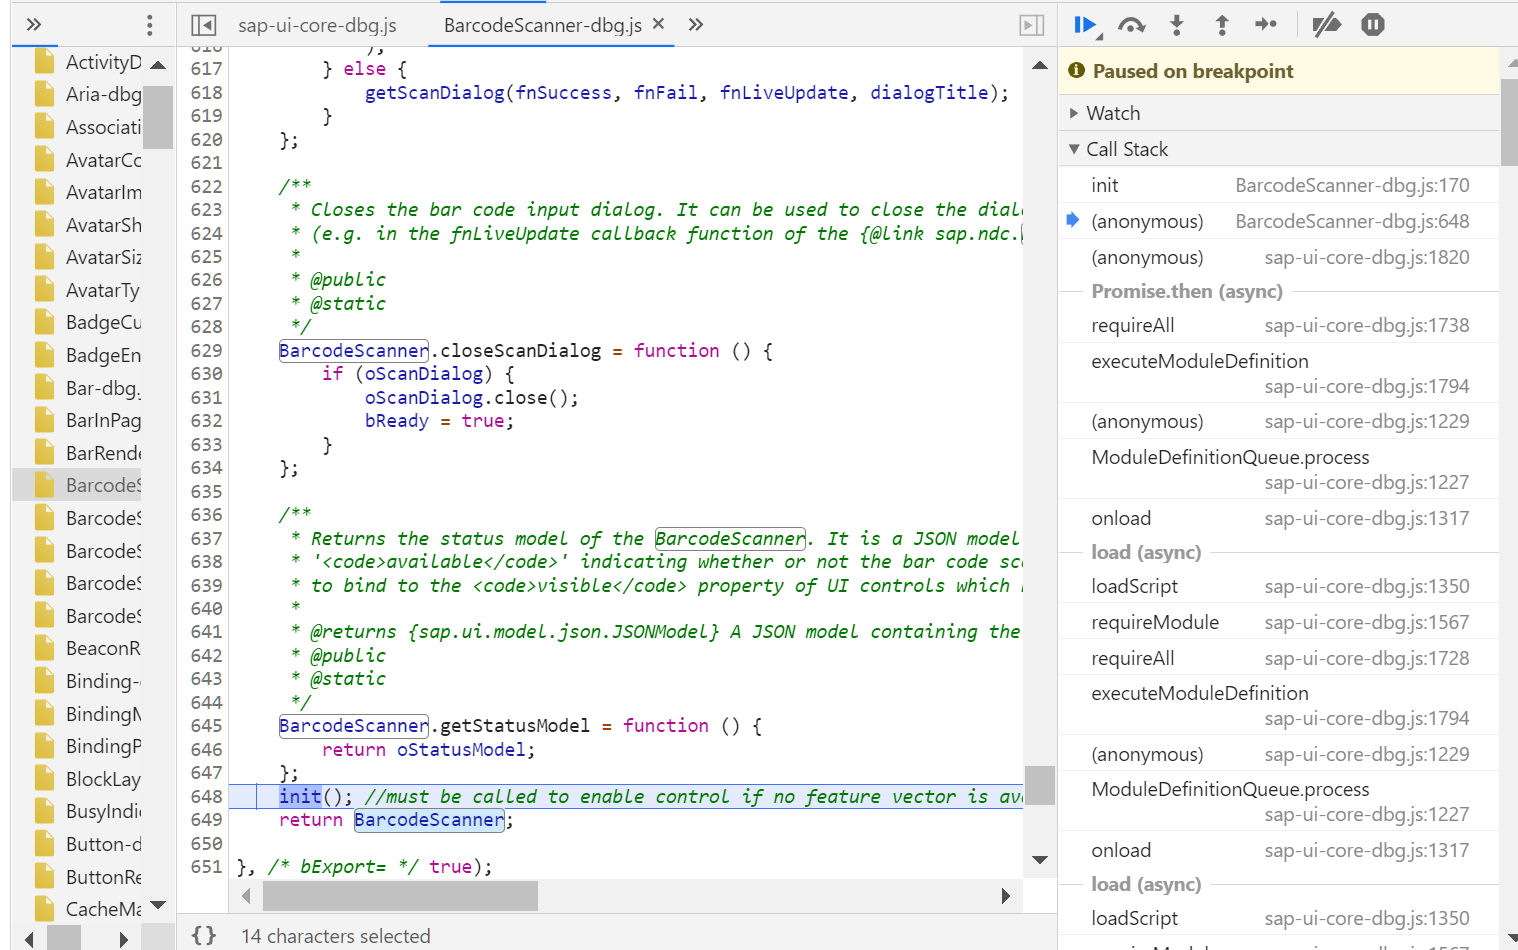 SAP UI5 BarcodeScannerButton 的初始化逻辑 - feature 检测，Cordova API 检测等逻辑